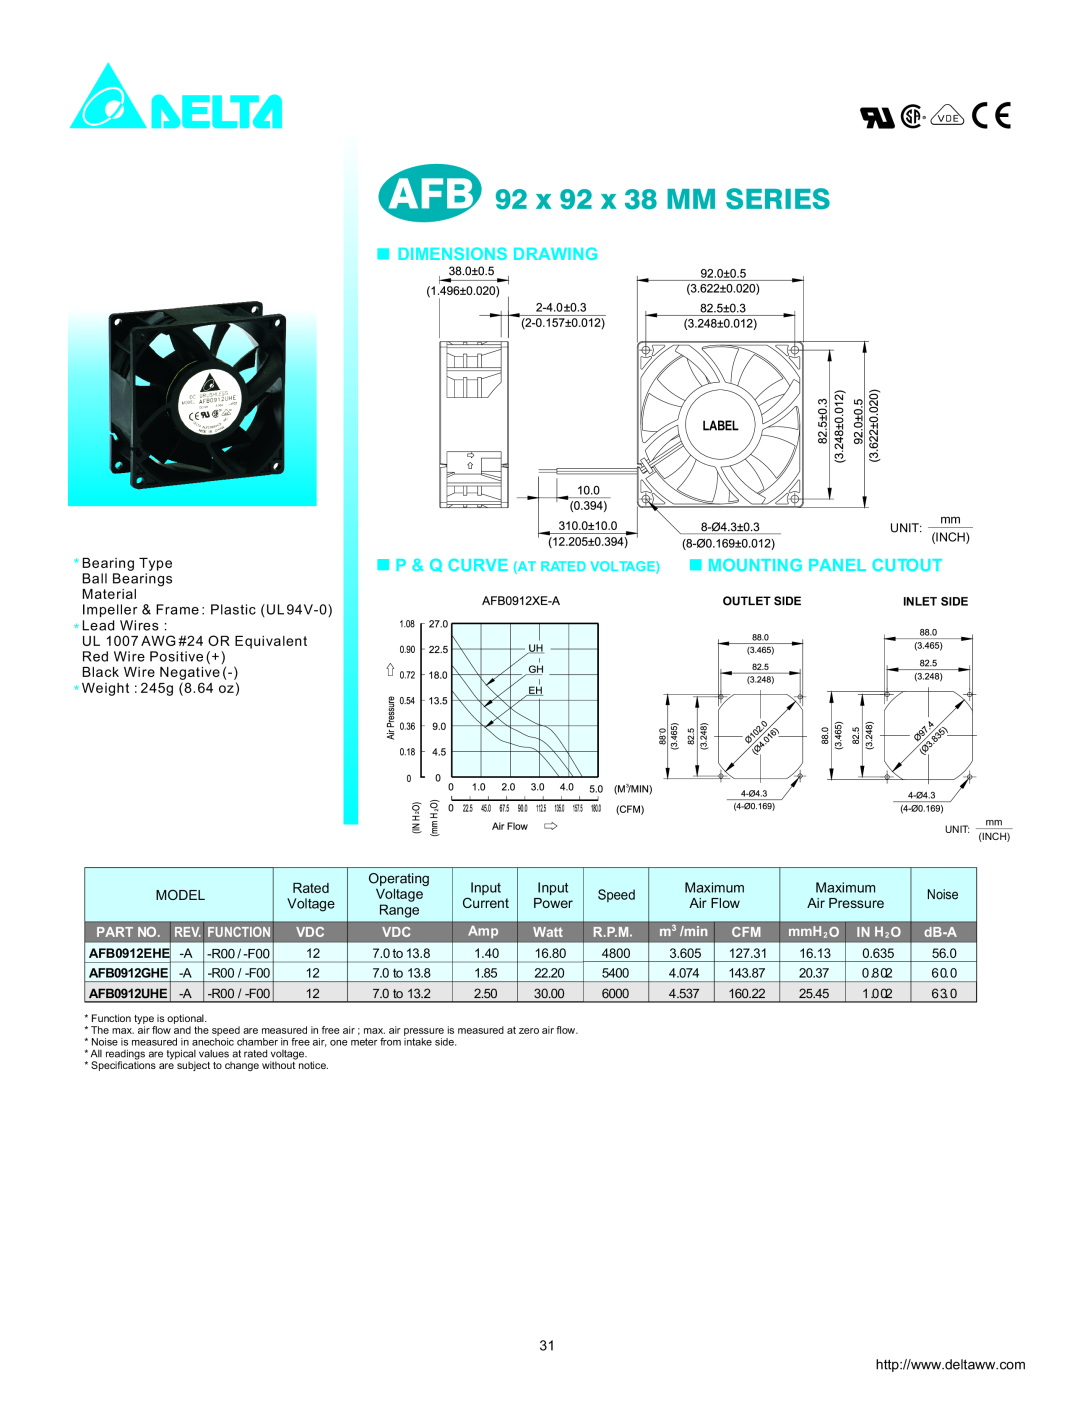 Delta Electronics AFB0912UHE dimensions AFB 92 x 92 x 38 MM SERIES, Dimensions Drawing, Mounting Panel Cutout, Watt, R.P.M 